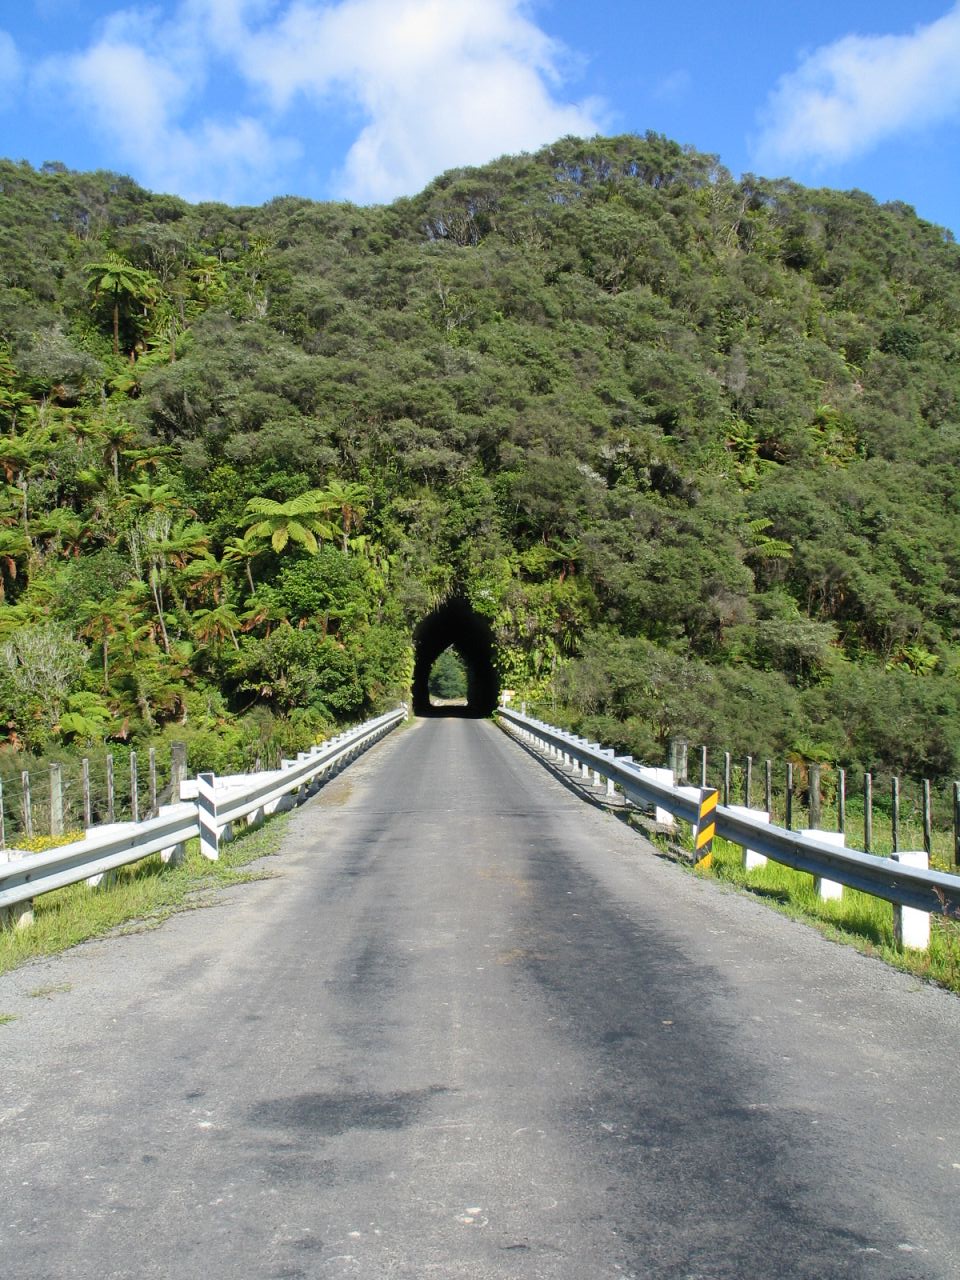 fotka / image most v Zapomenutem svete, New Zealand